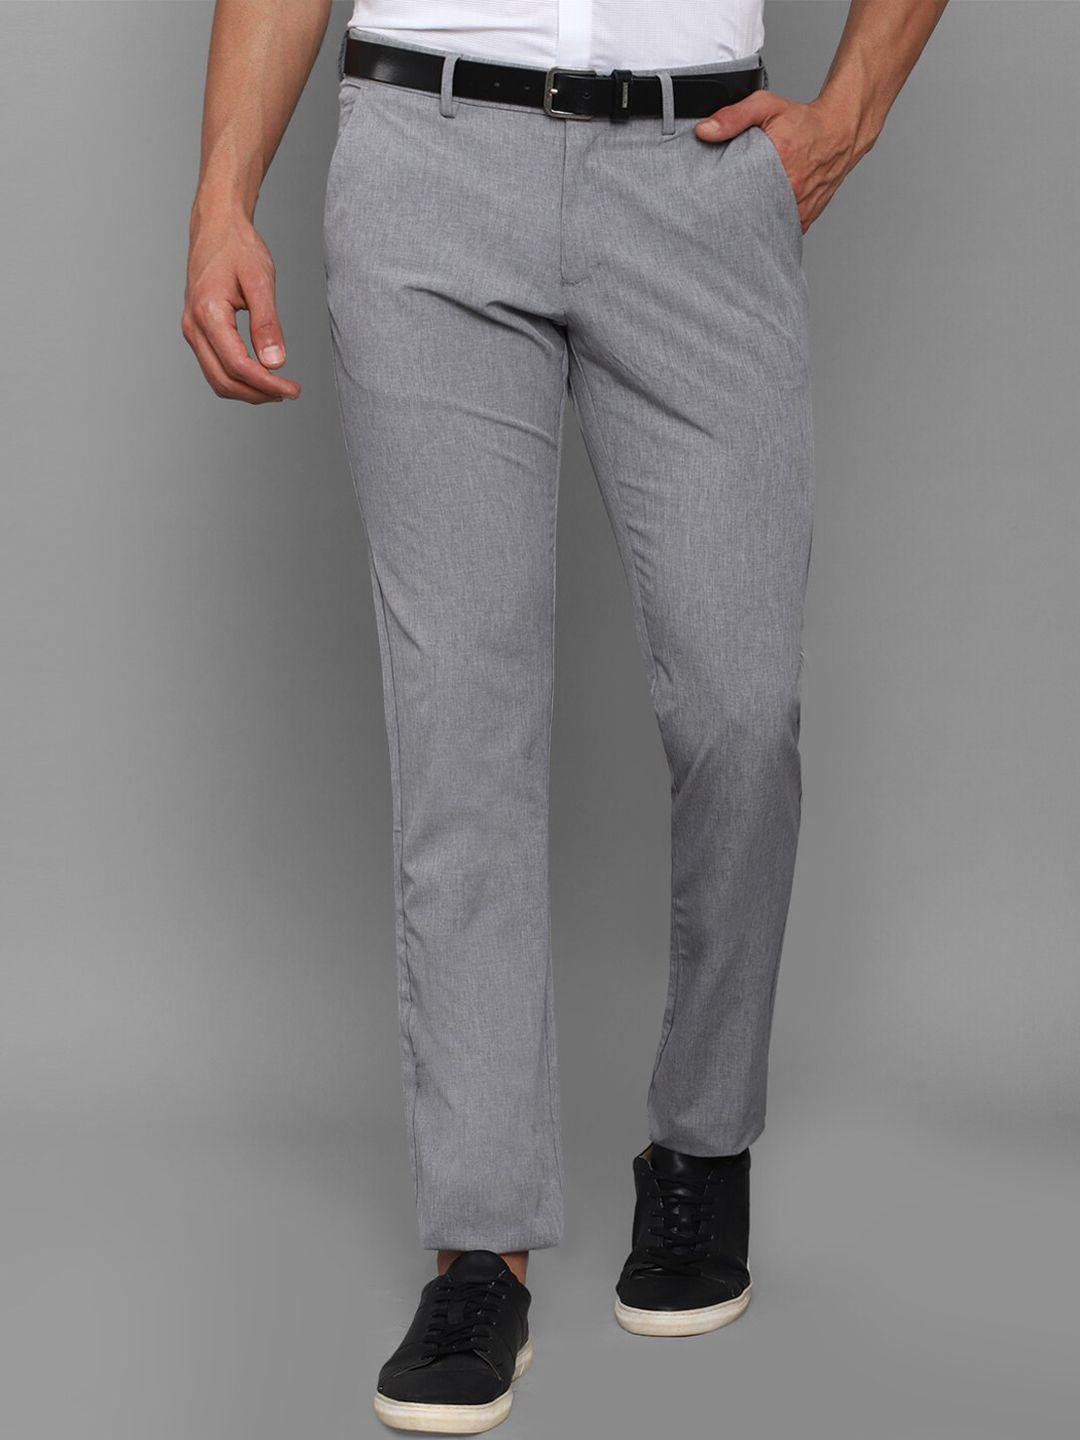 allen solly men grey textured slim fit trousers